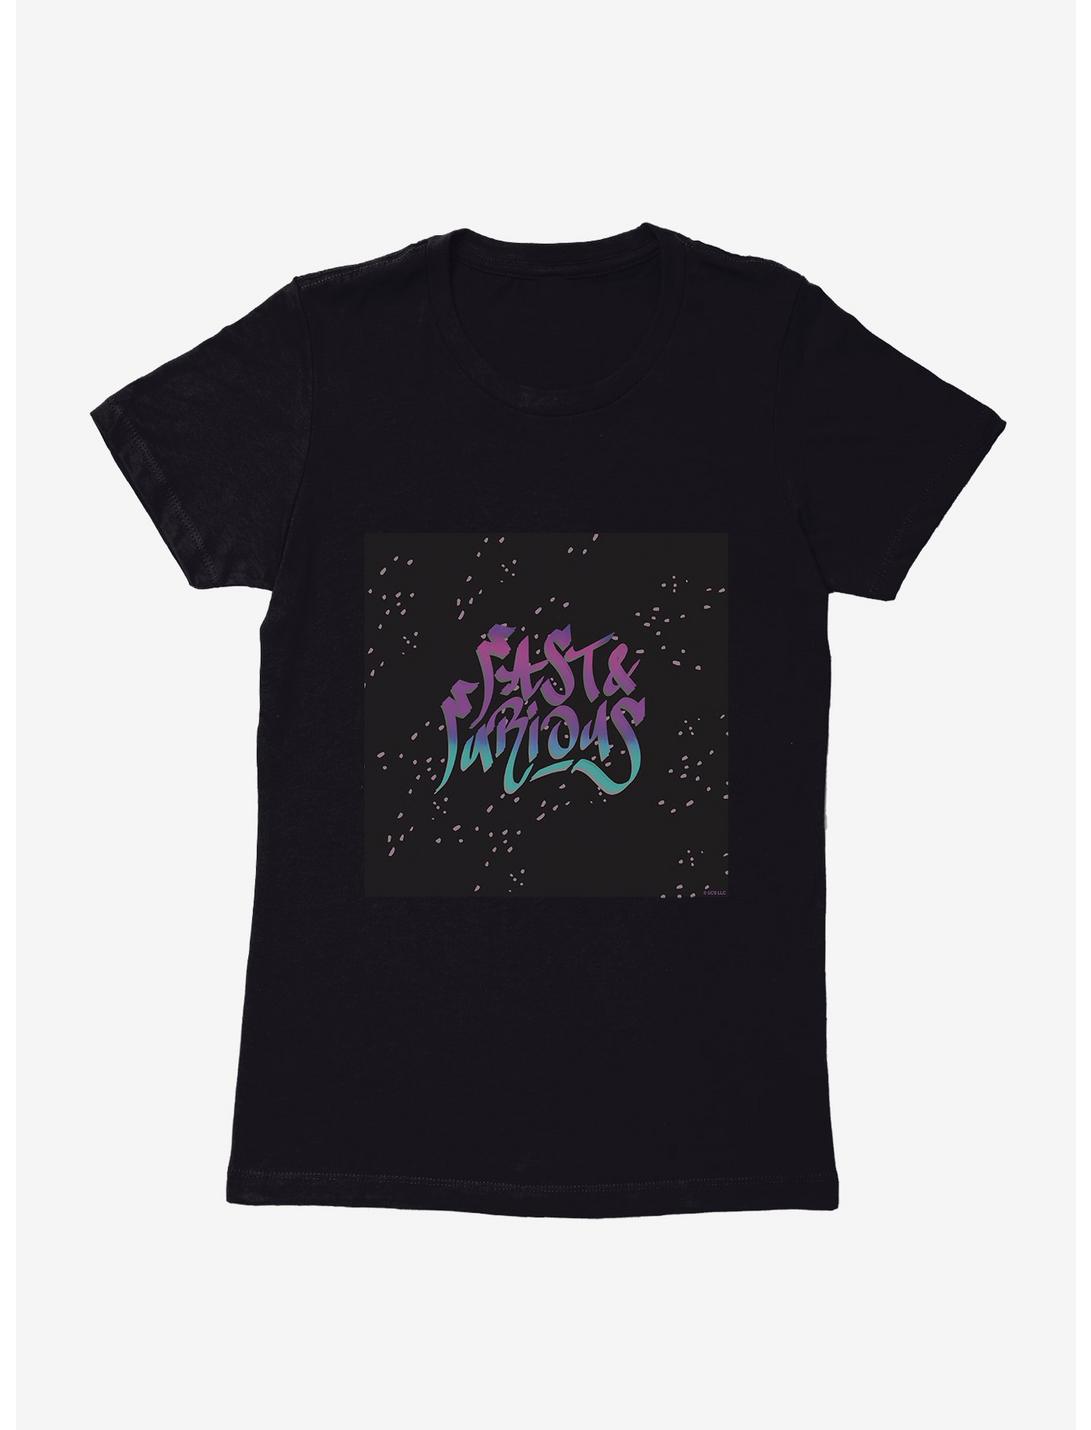 Fast & Furious Title Grafitti Womens T-Shirt, BLACK, hi-res